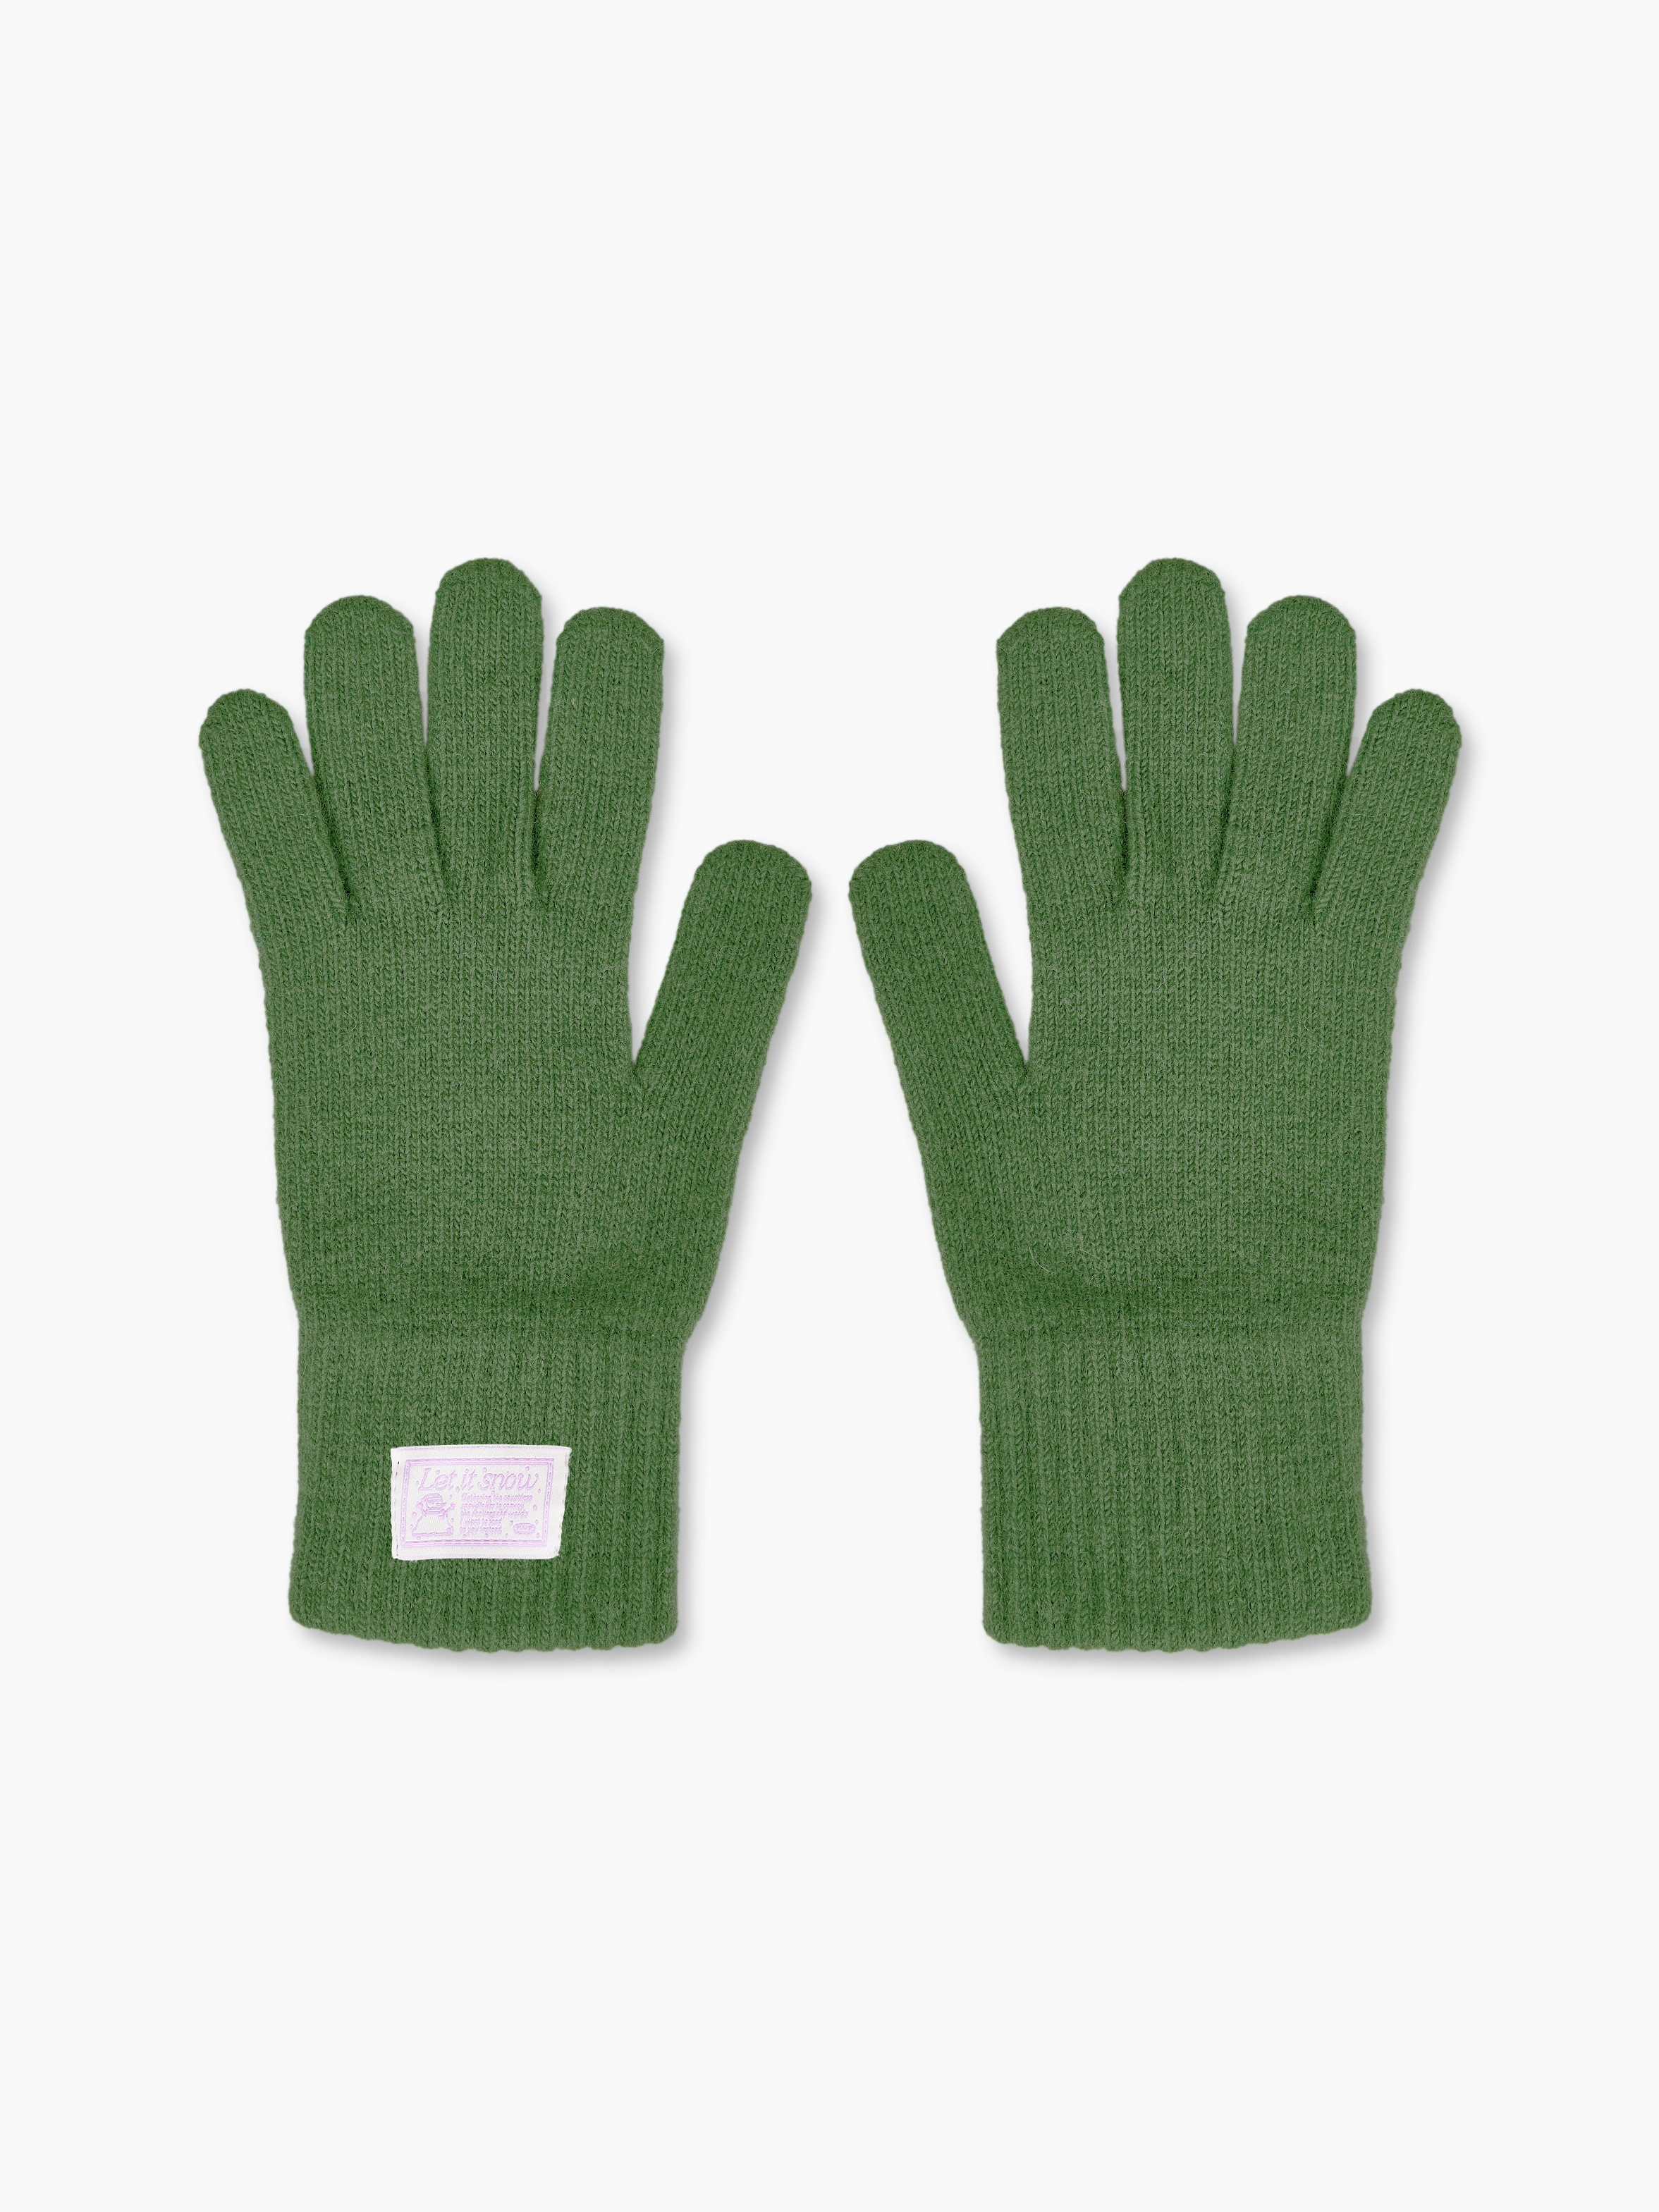 let it snow label gloves (green)